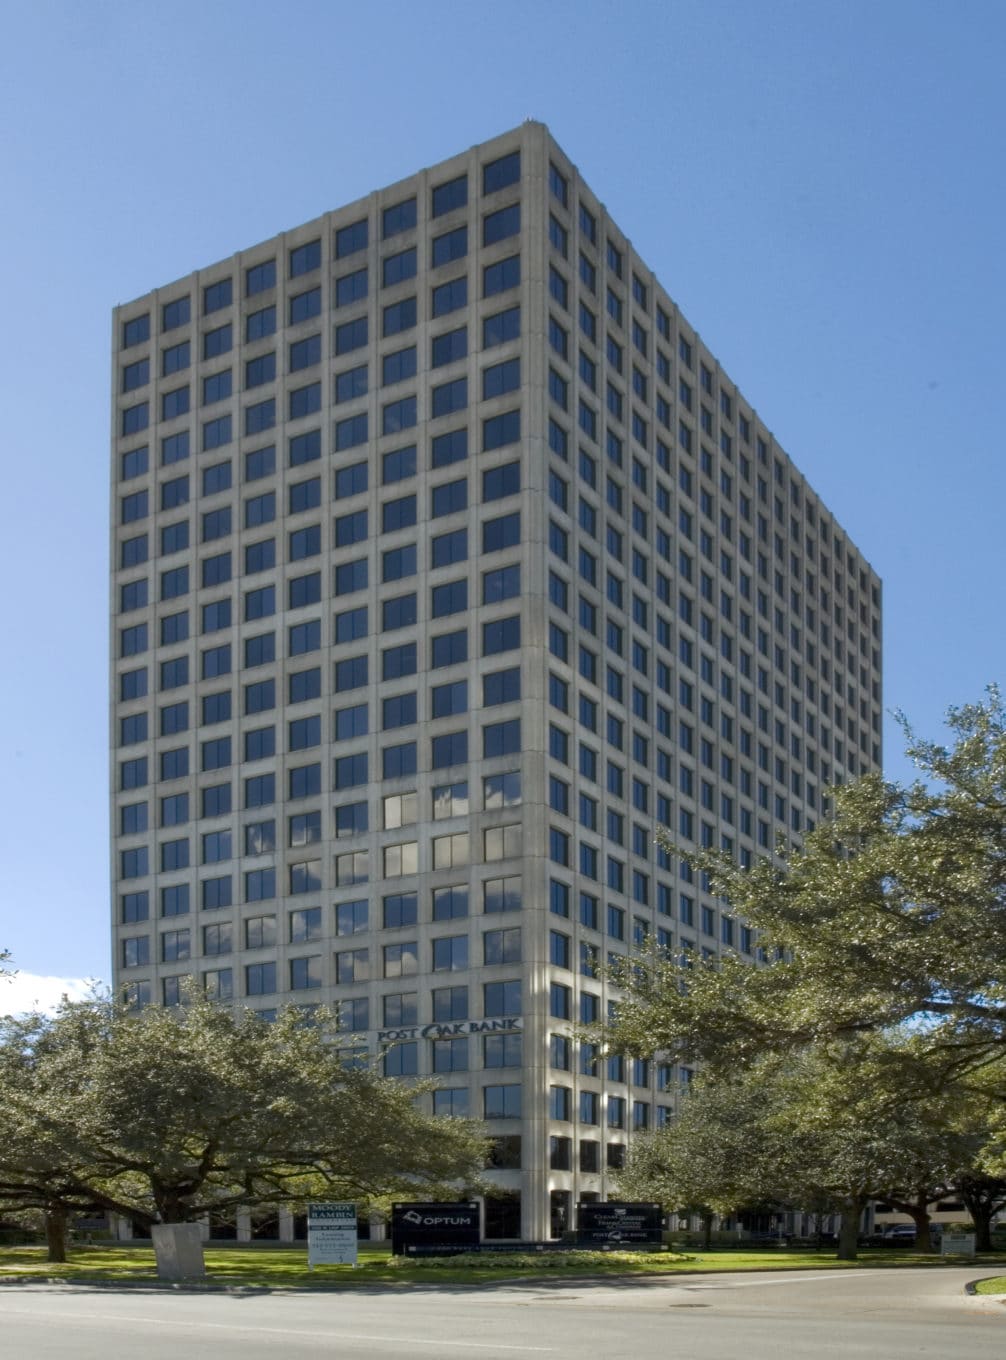 Building located in the Galleria area in Houston, Texas